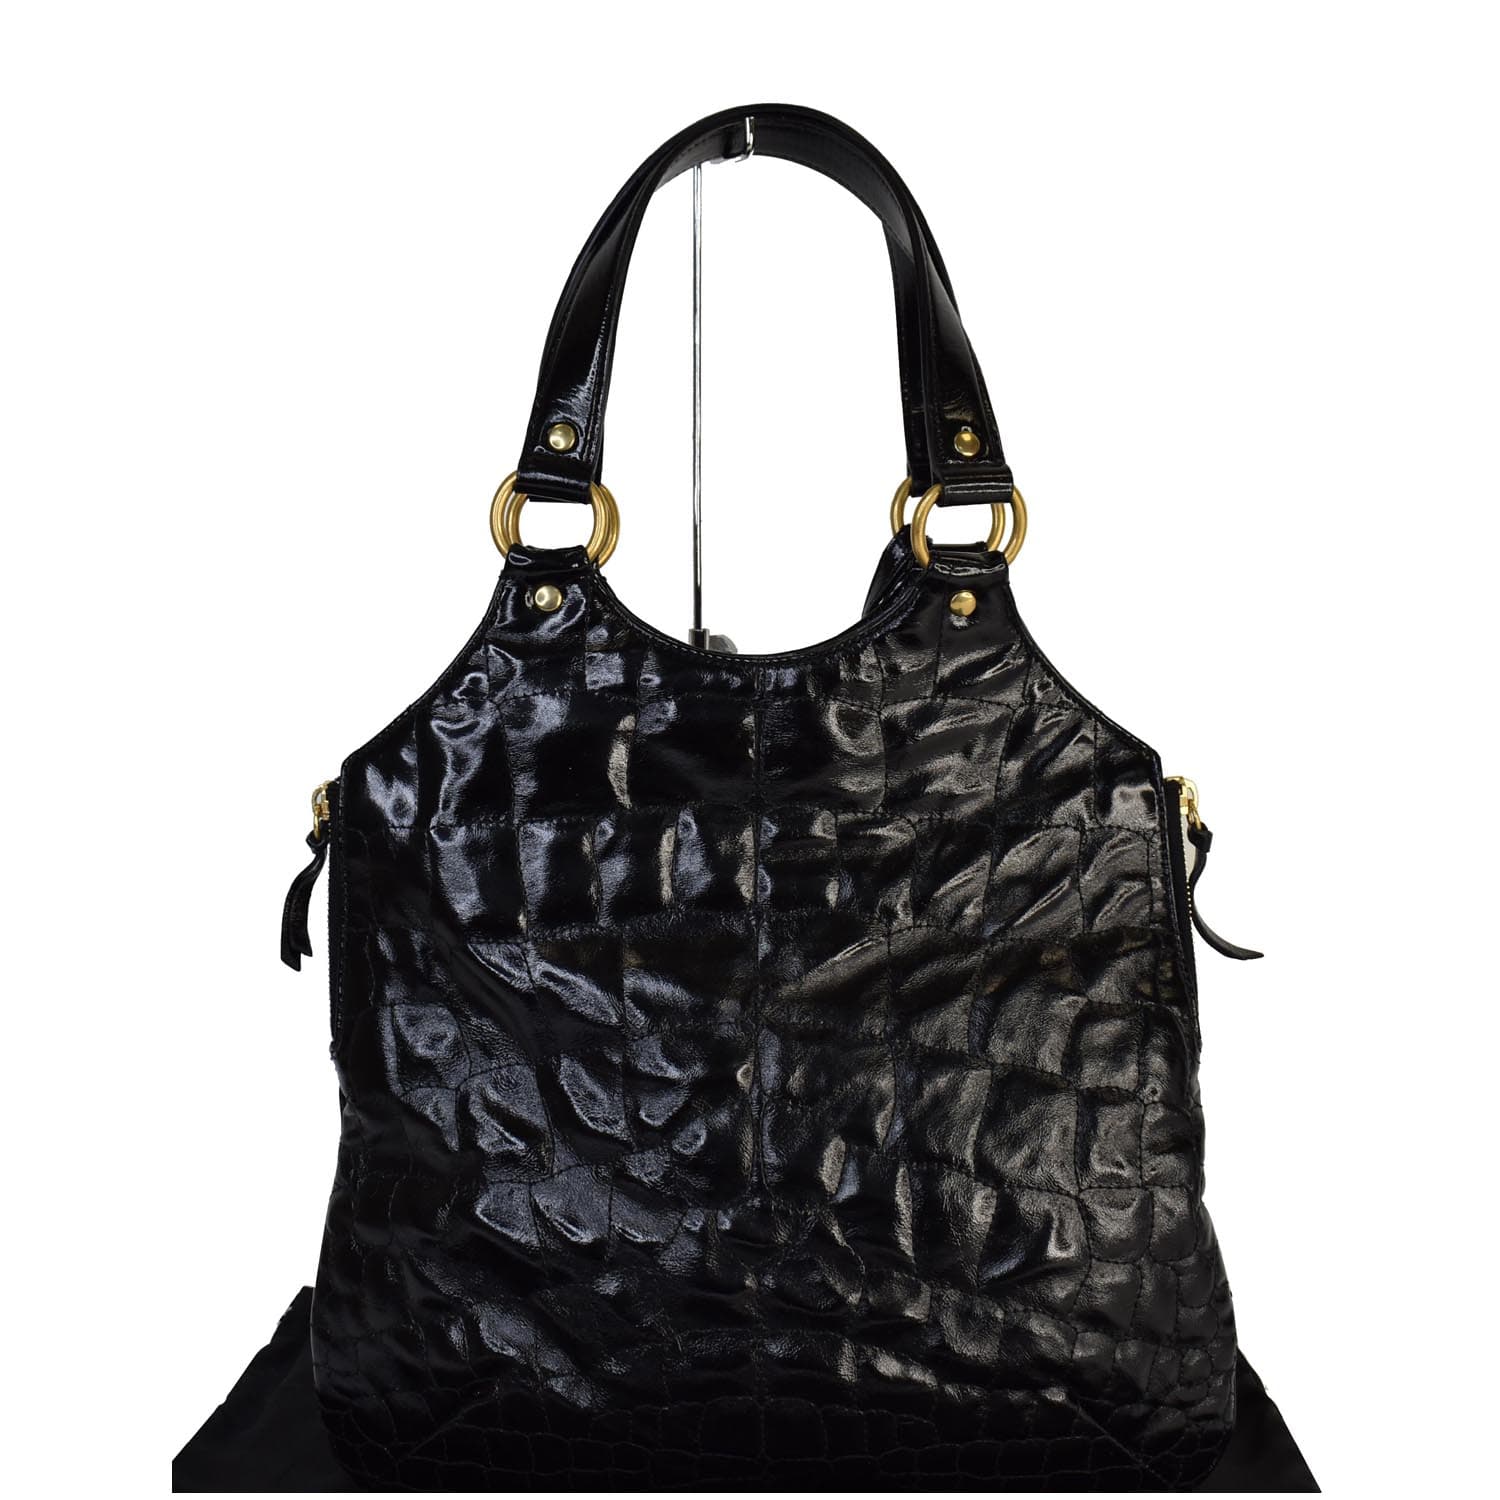 New, unused embroidered YSL Yves Saint Laurent novelty tote bag, black.